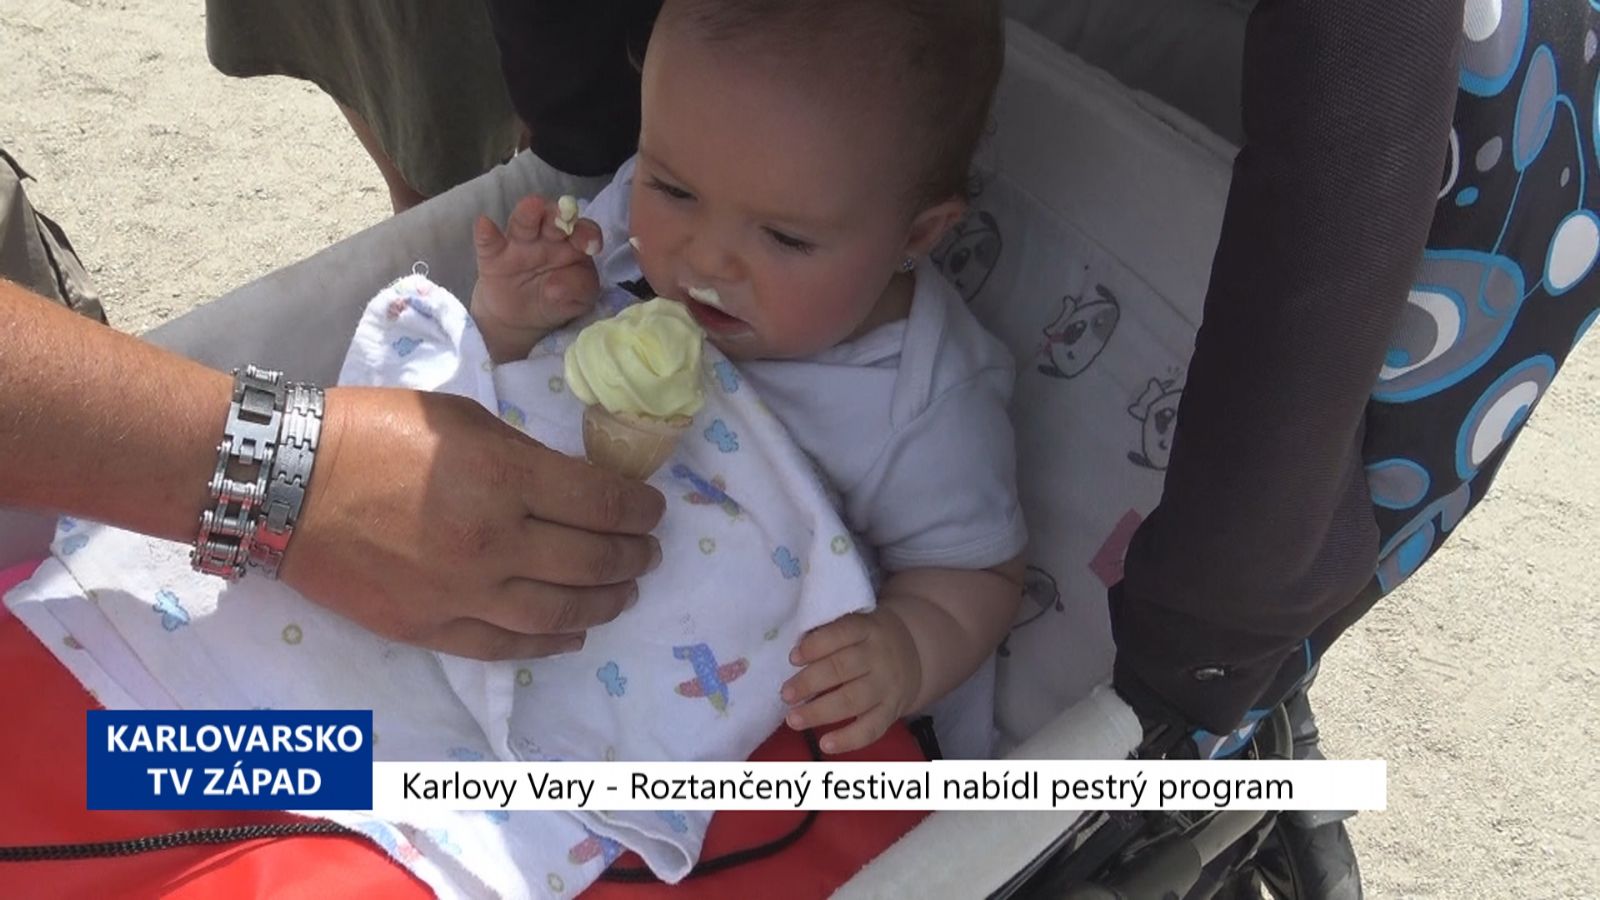 Karlovy Vary: Roztančený festival nabídl pestrý program (TV Západ)